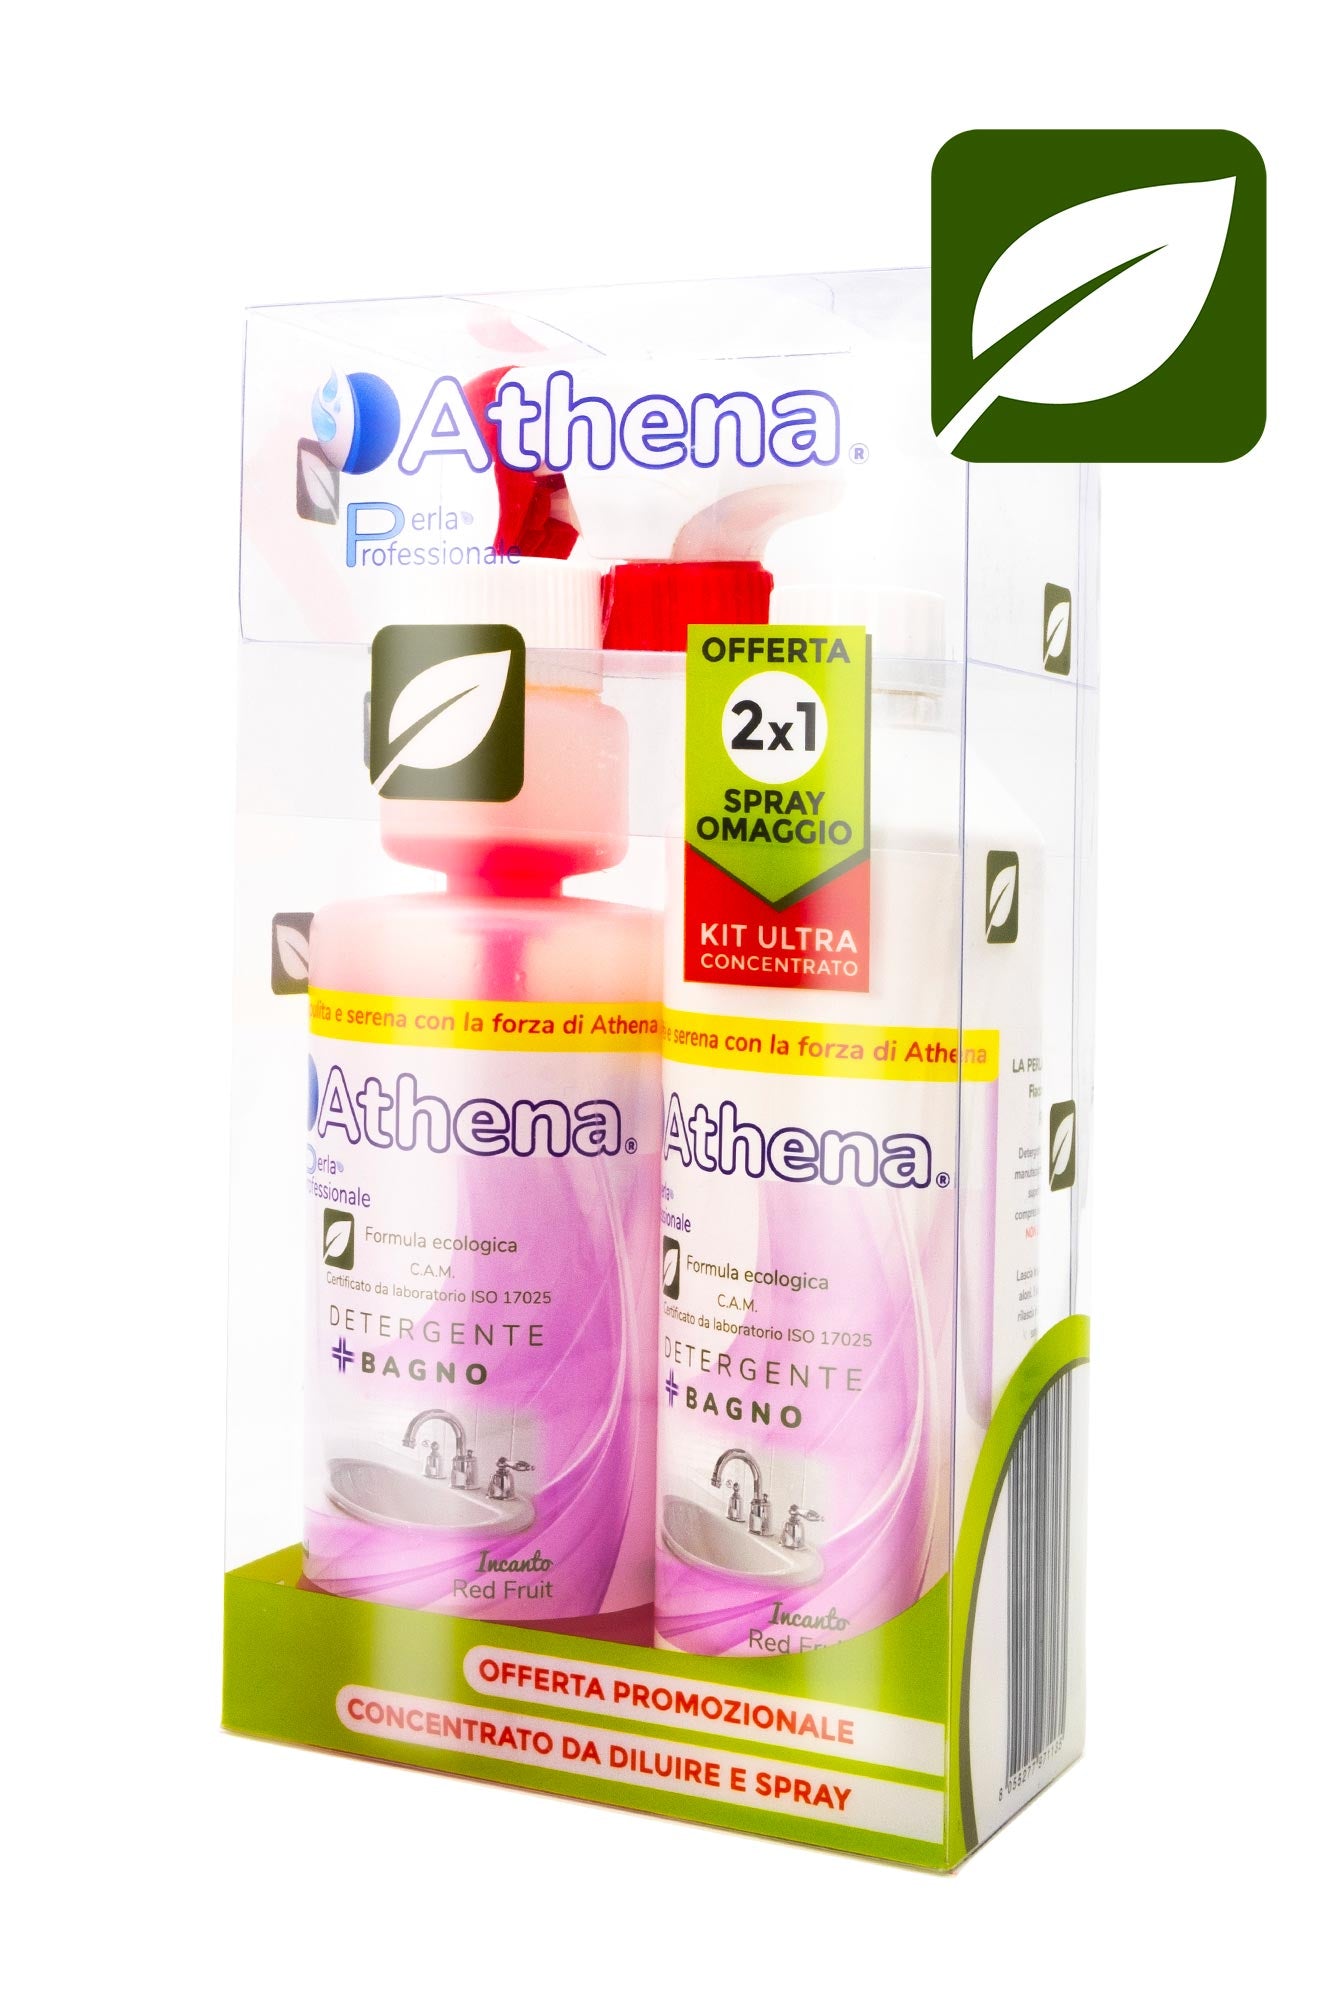 Kit Detergente Disincrostante Bagno Formula Ecologica CAM: Incanto Red Fruit